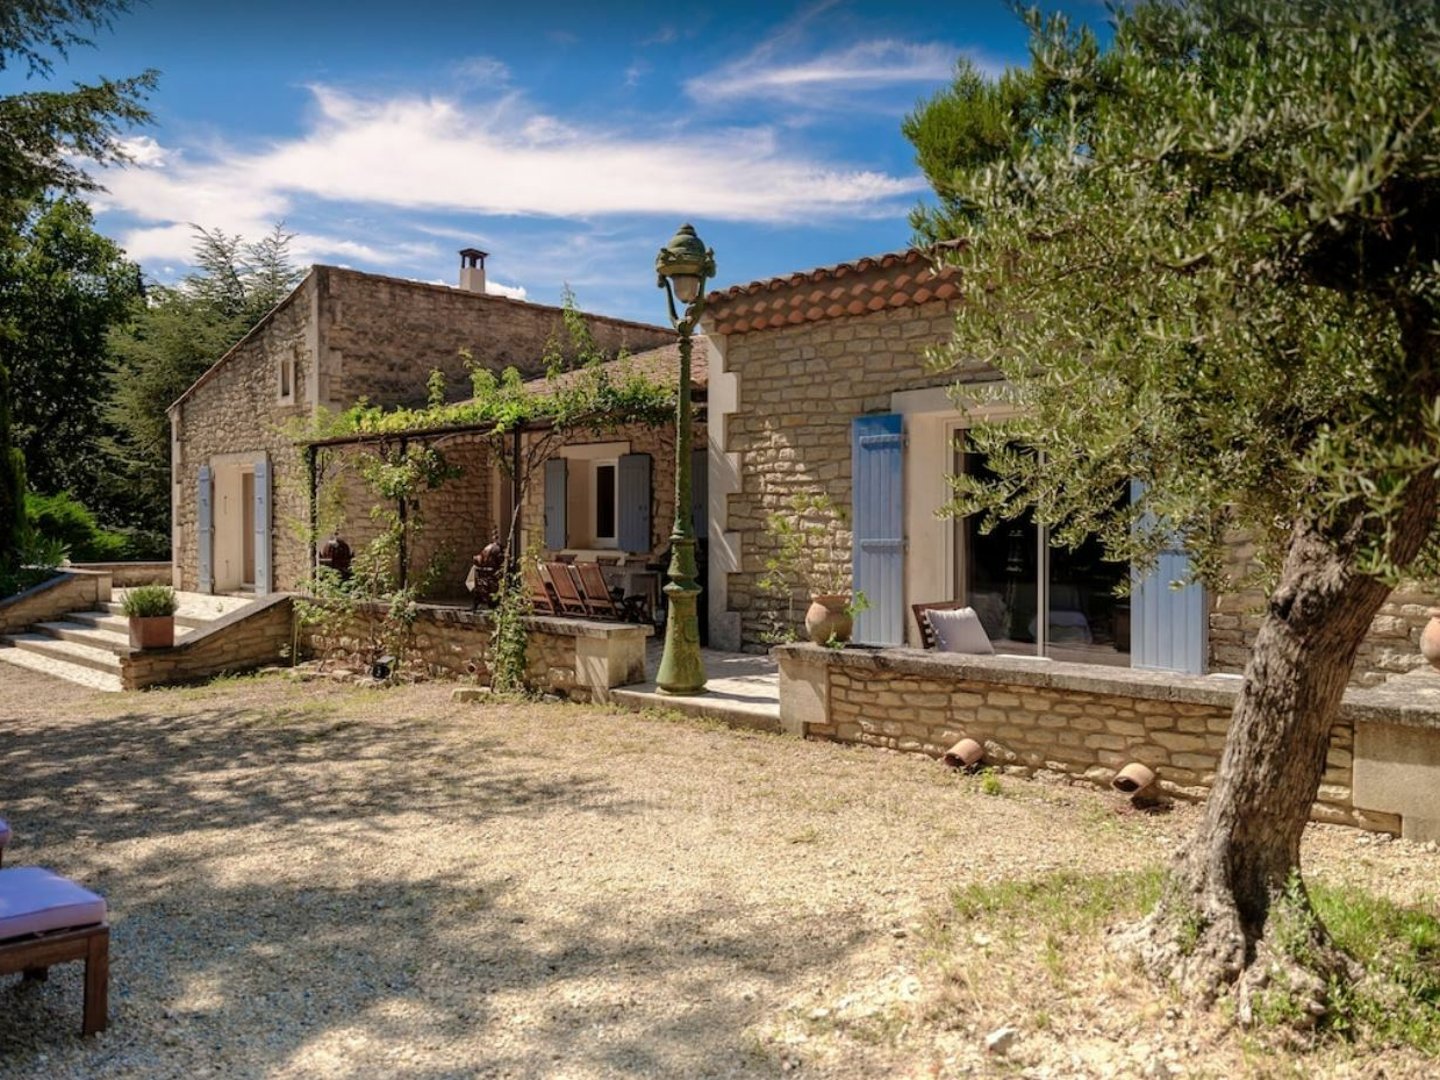 17 - Maison Provence: Villa: Exterior